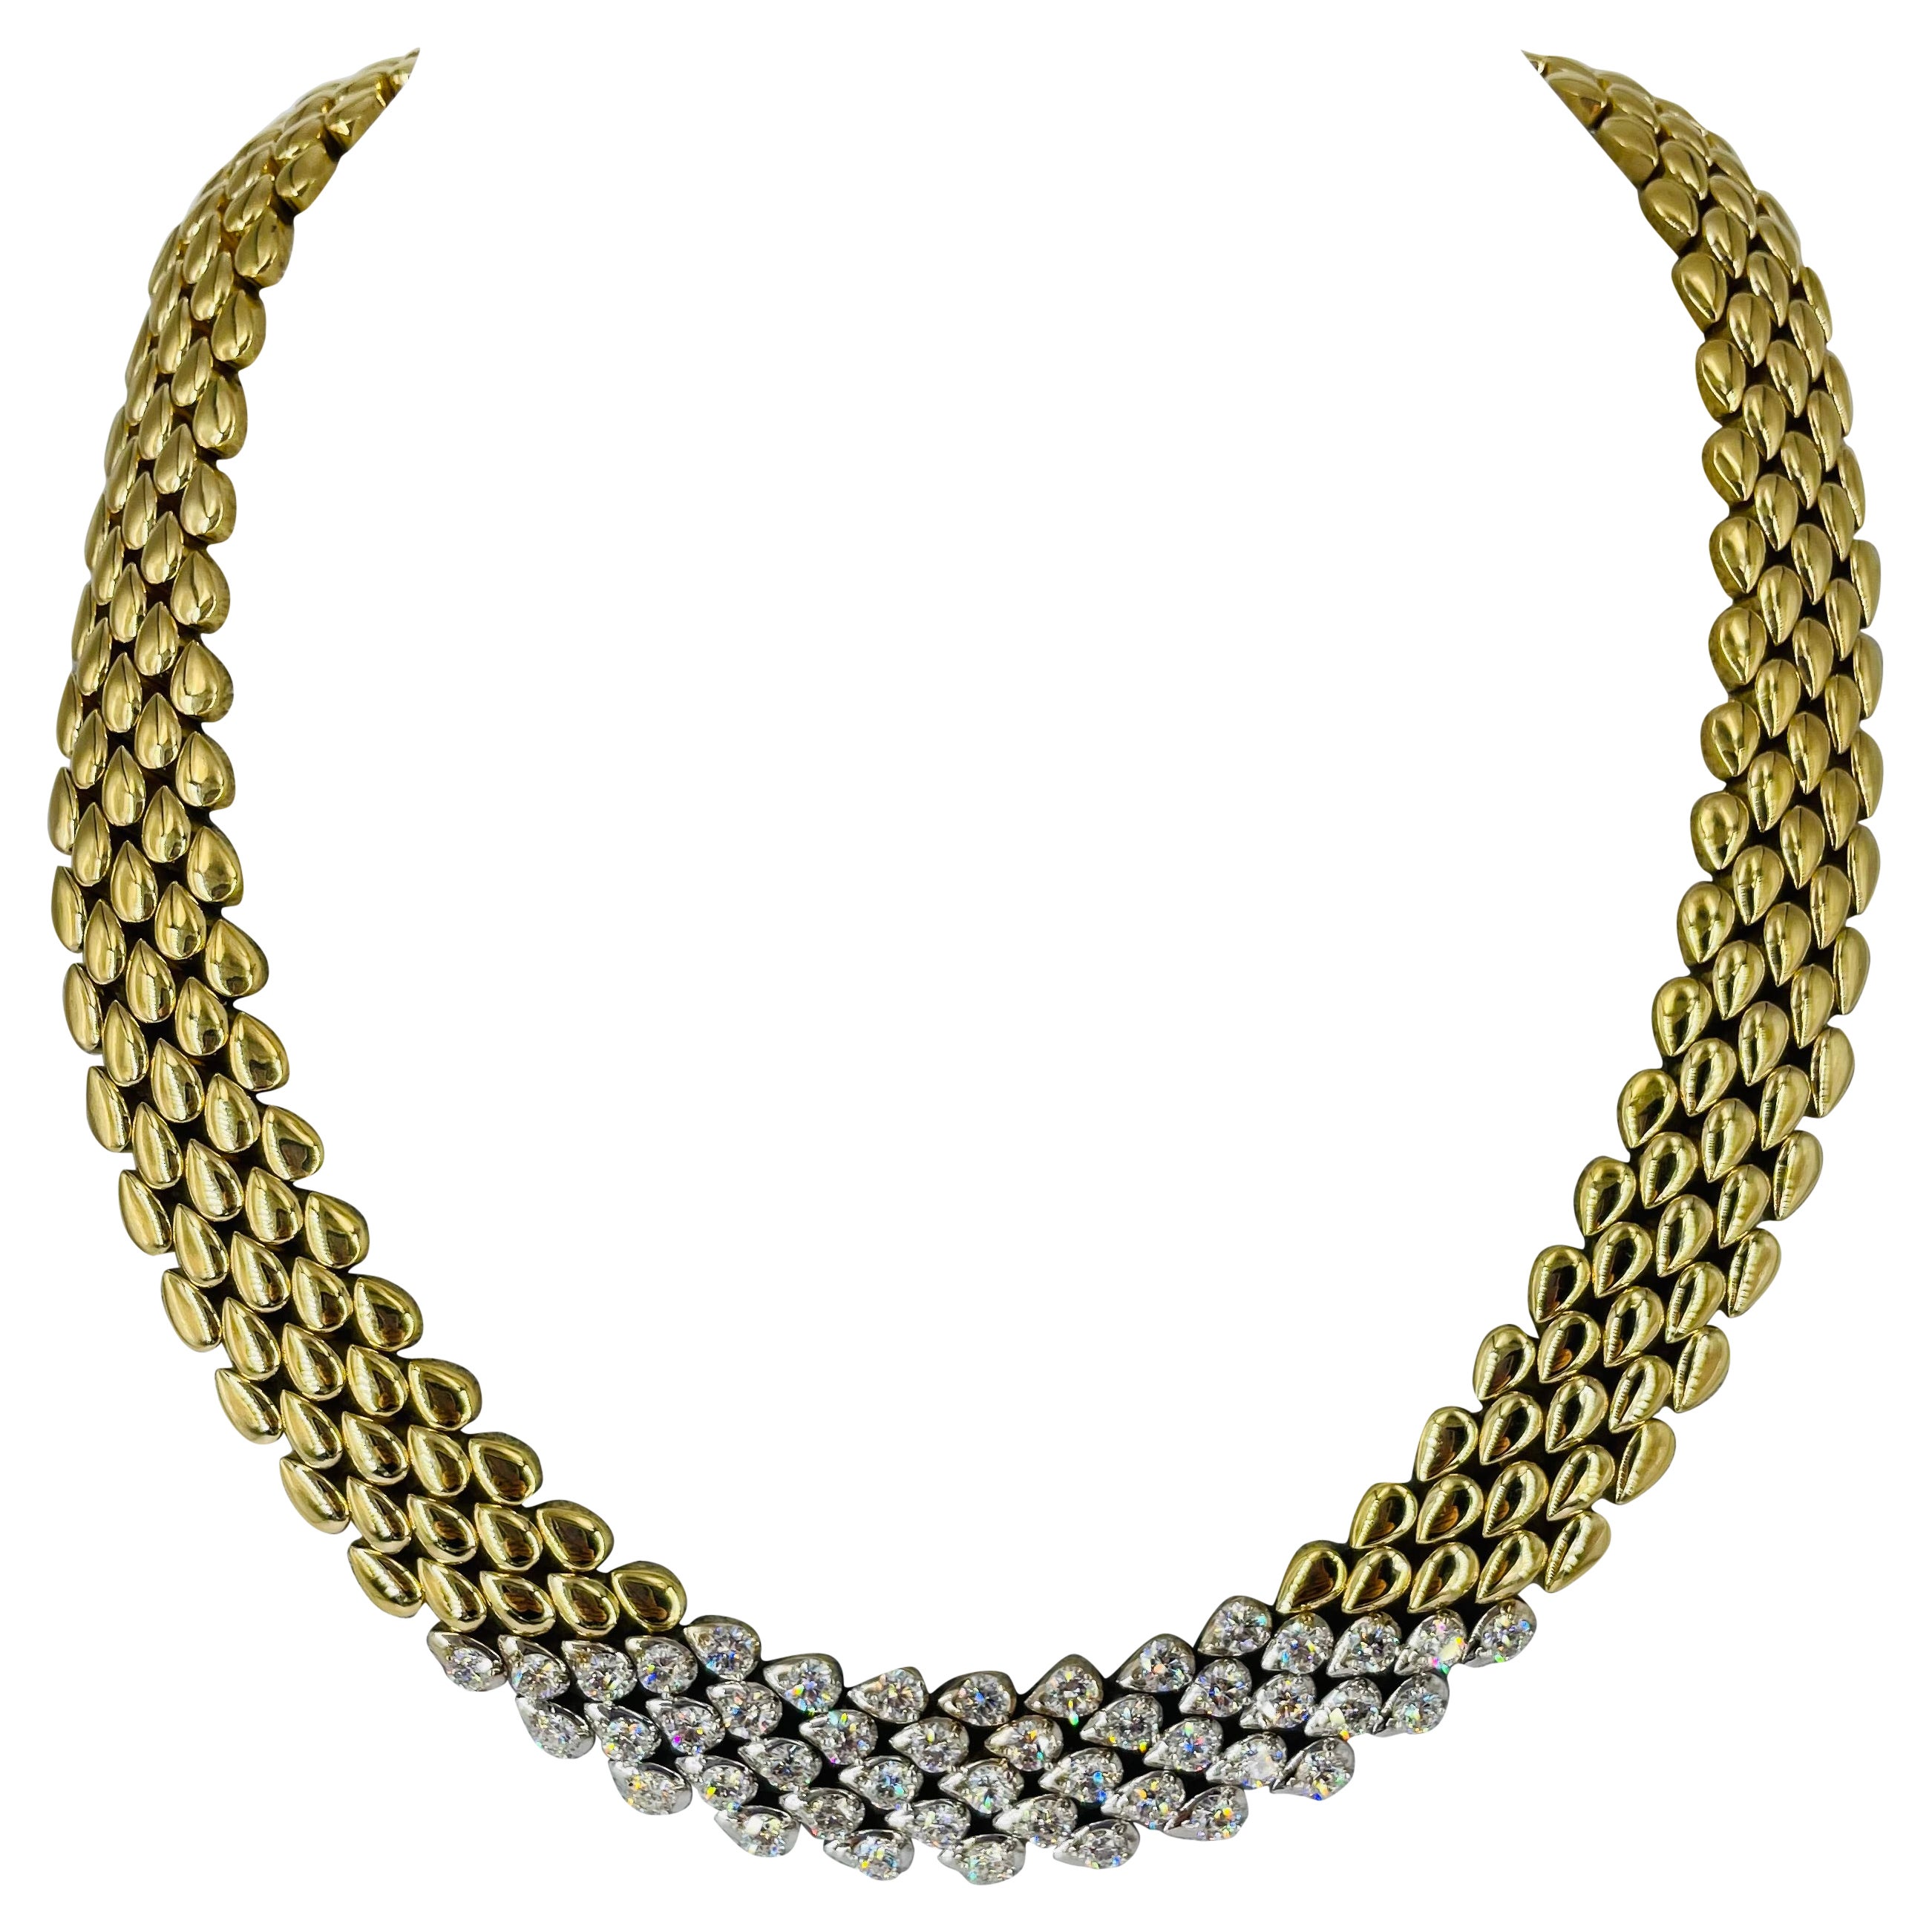 18K Yellow Gold Multi Row Choker Necklace with 8.25 carat Round Diamonds